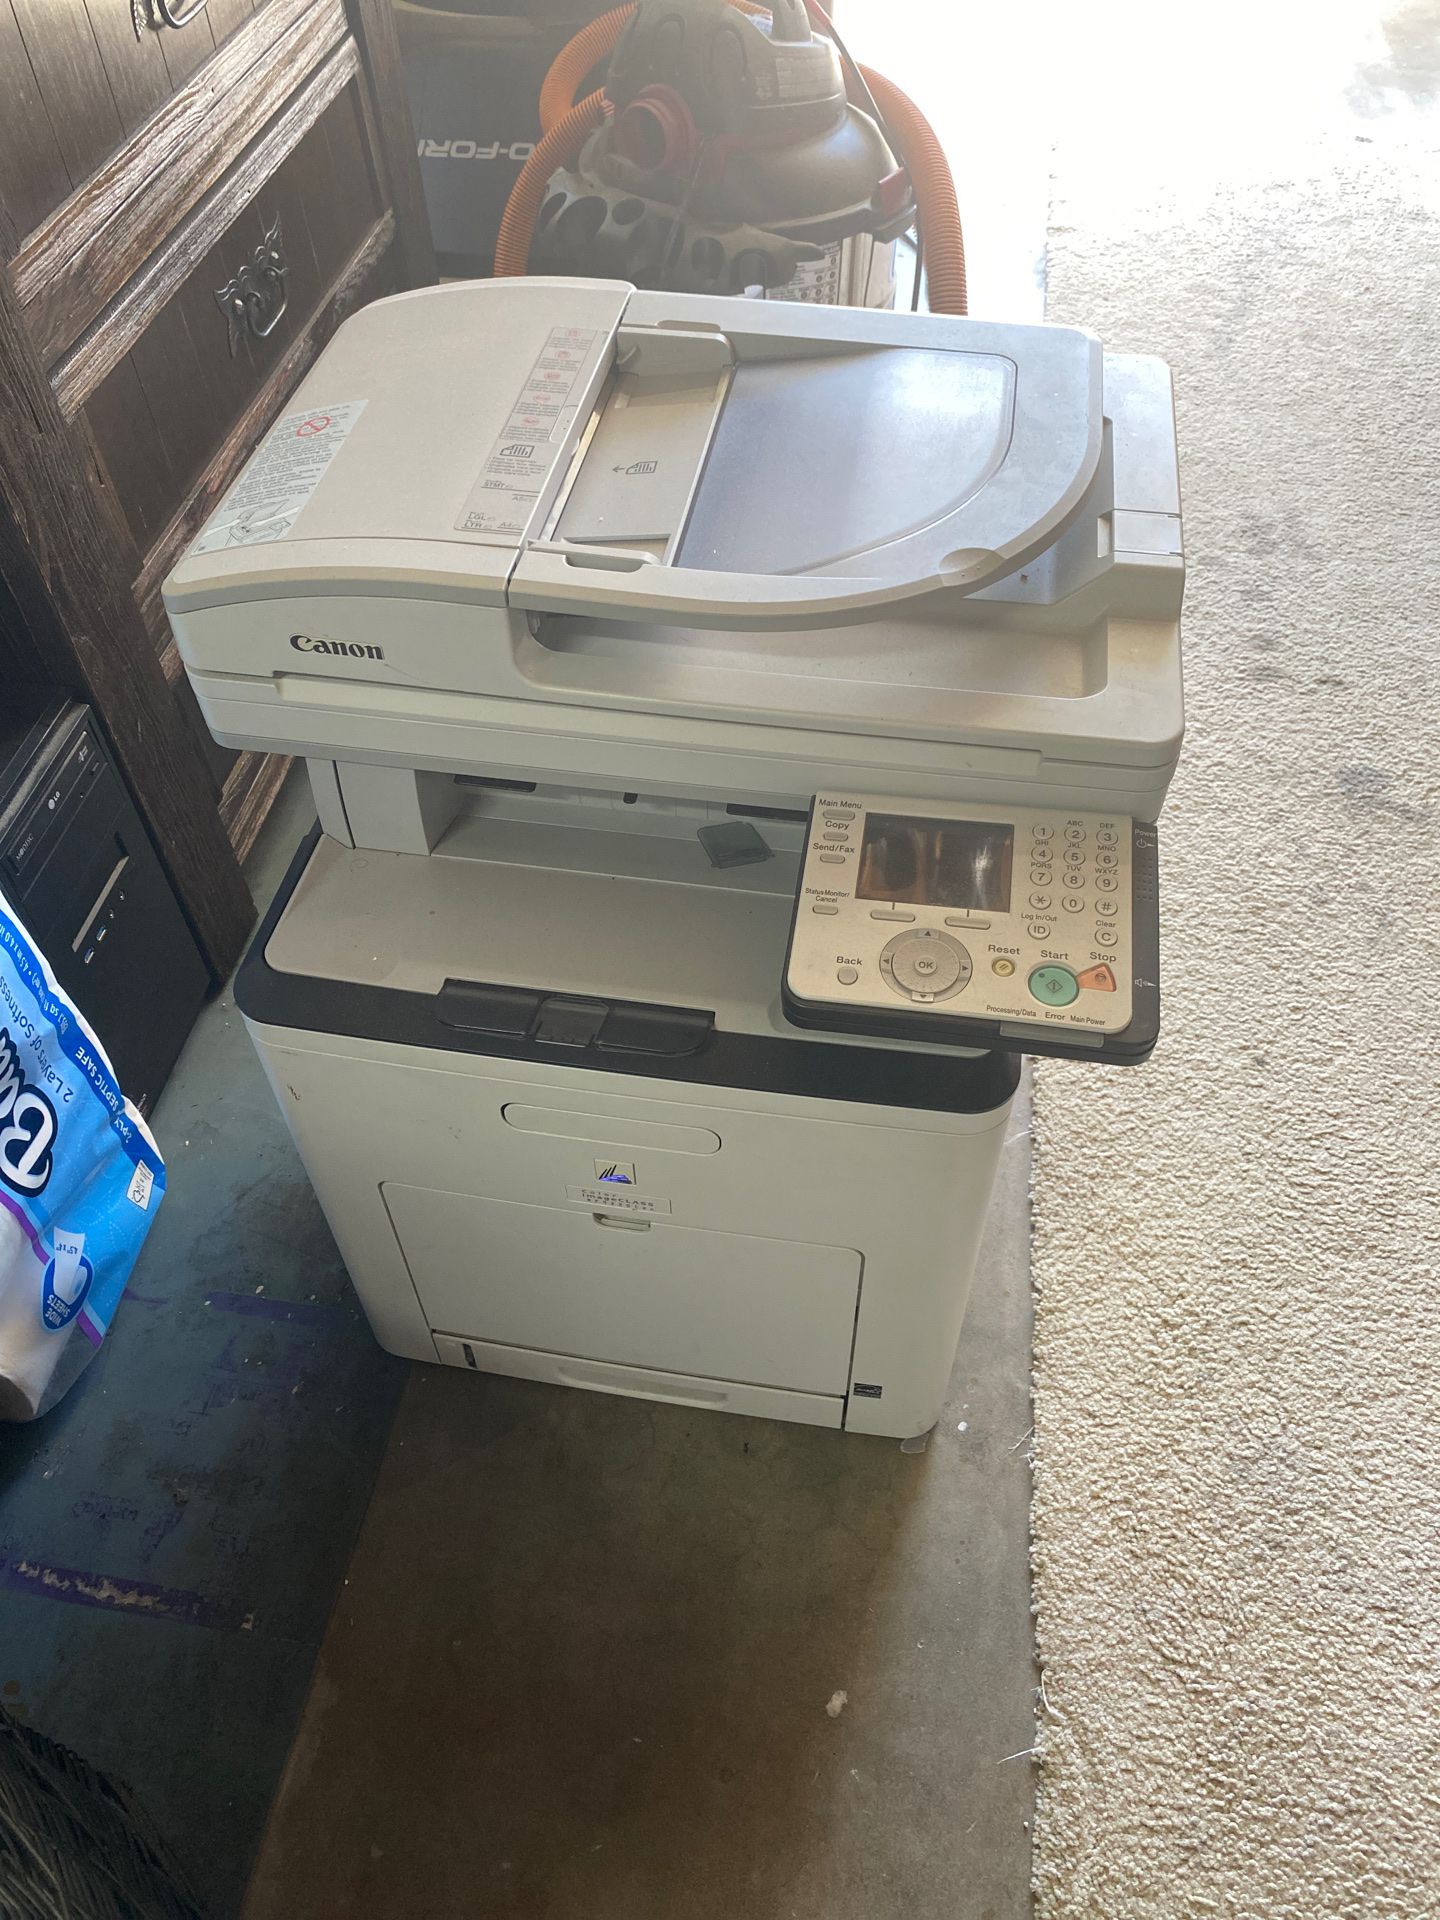 Canon color multifunction printer copier fax